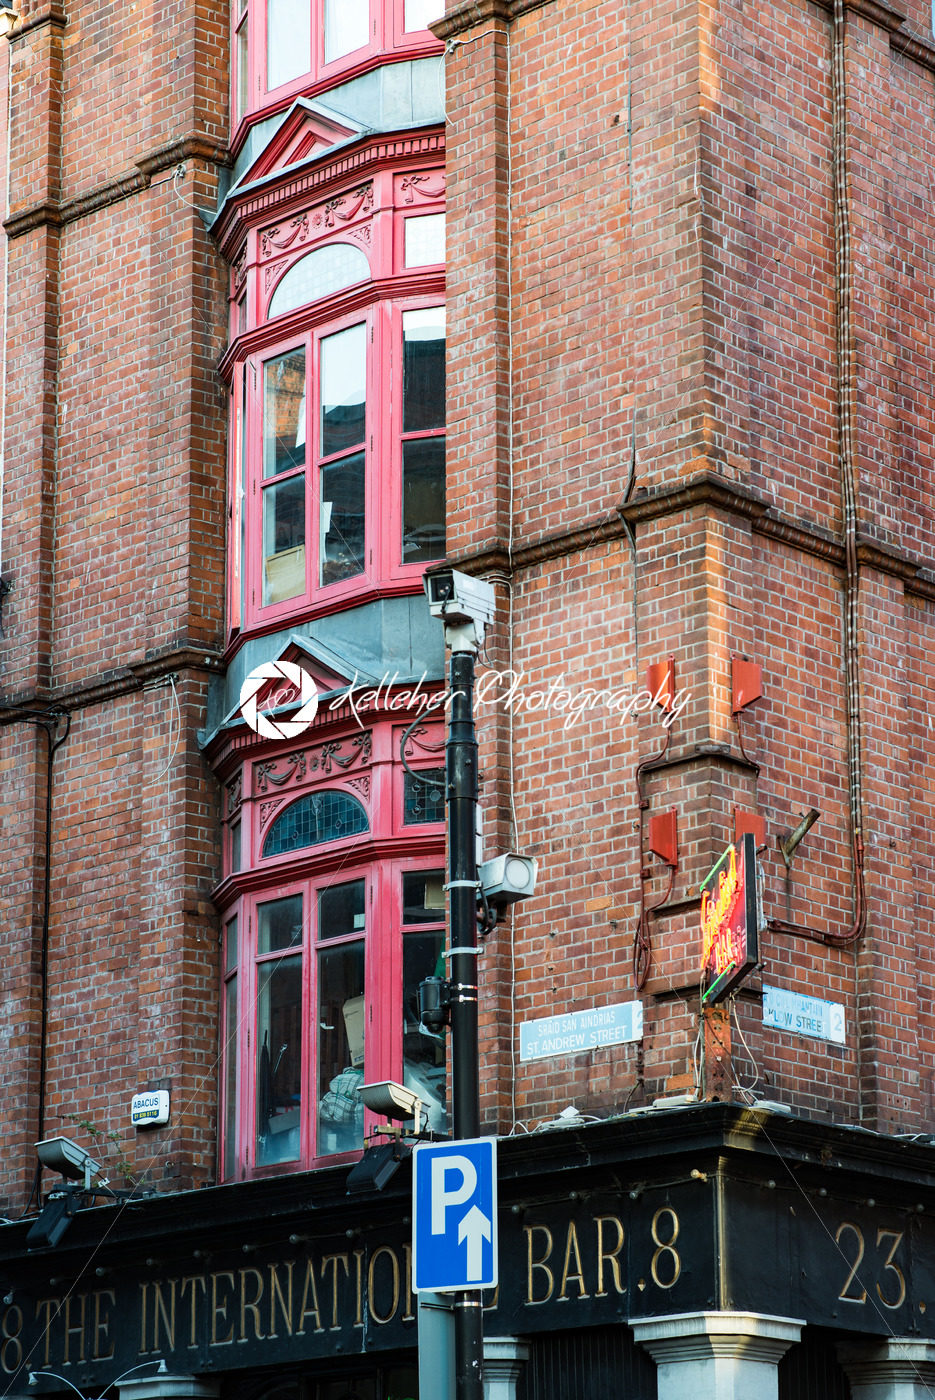 DUBLIN, IRELAND – AUGUST 31, 2017: City of Dublin Ireland - Kelleher Photography Store